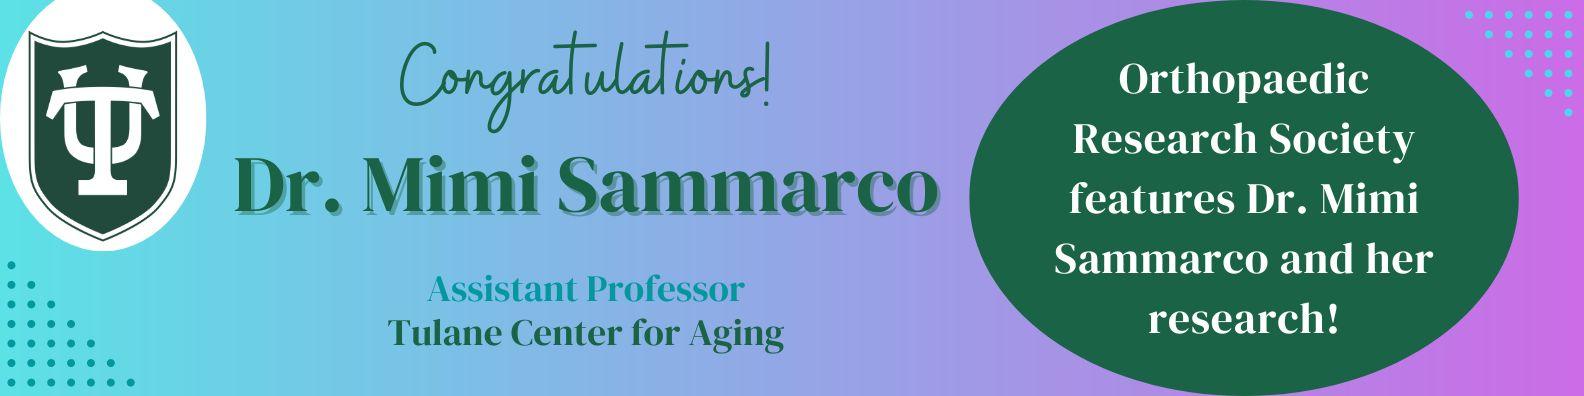 Congratulations! Dr. Mimi Sammarco